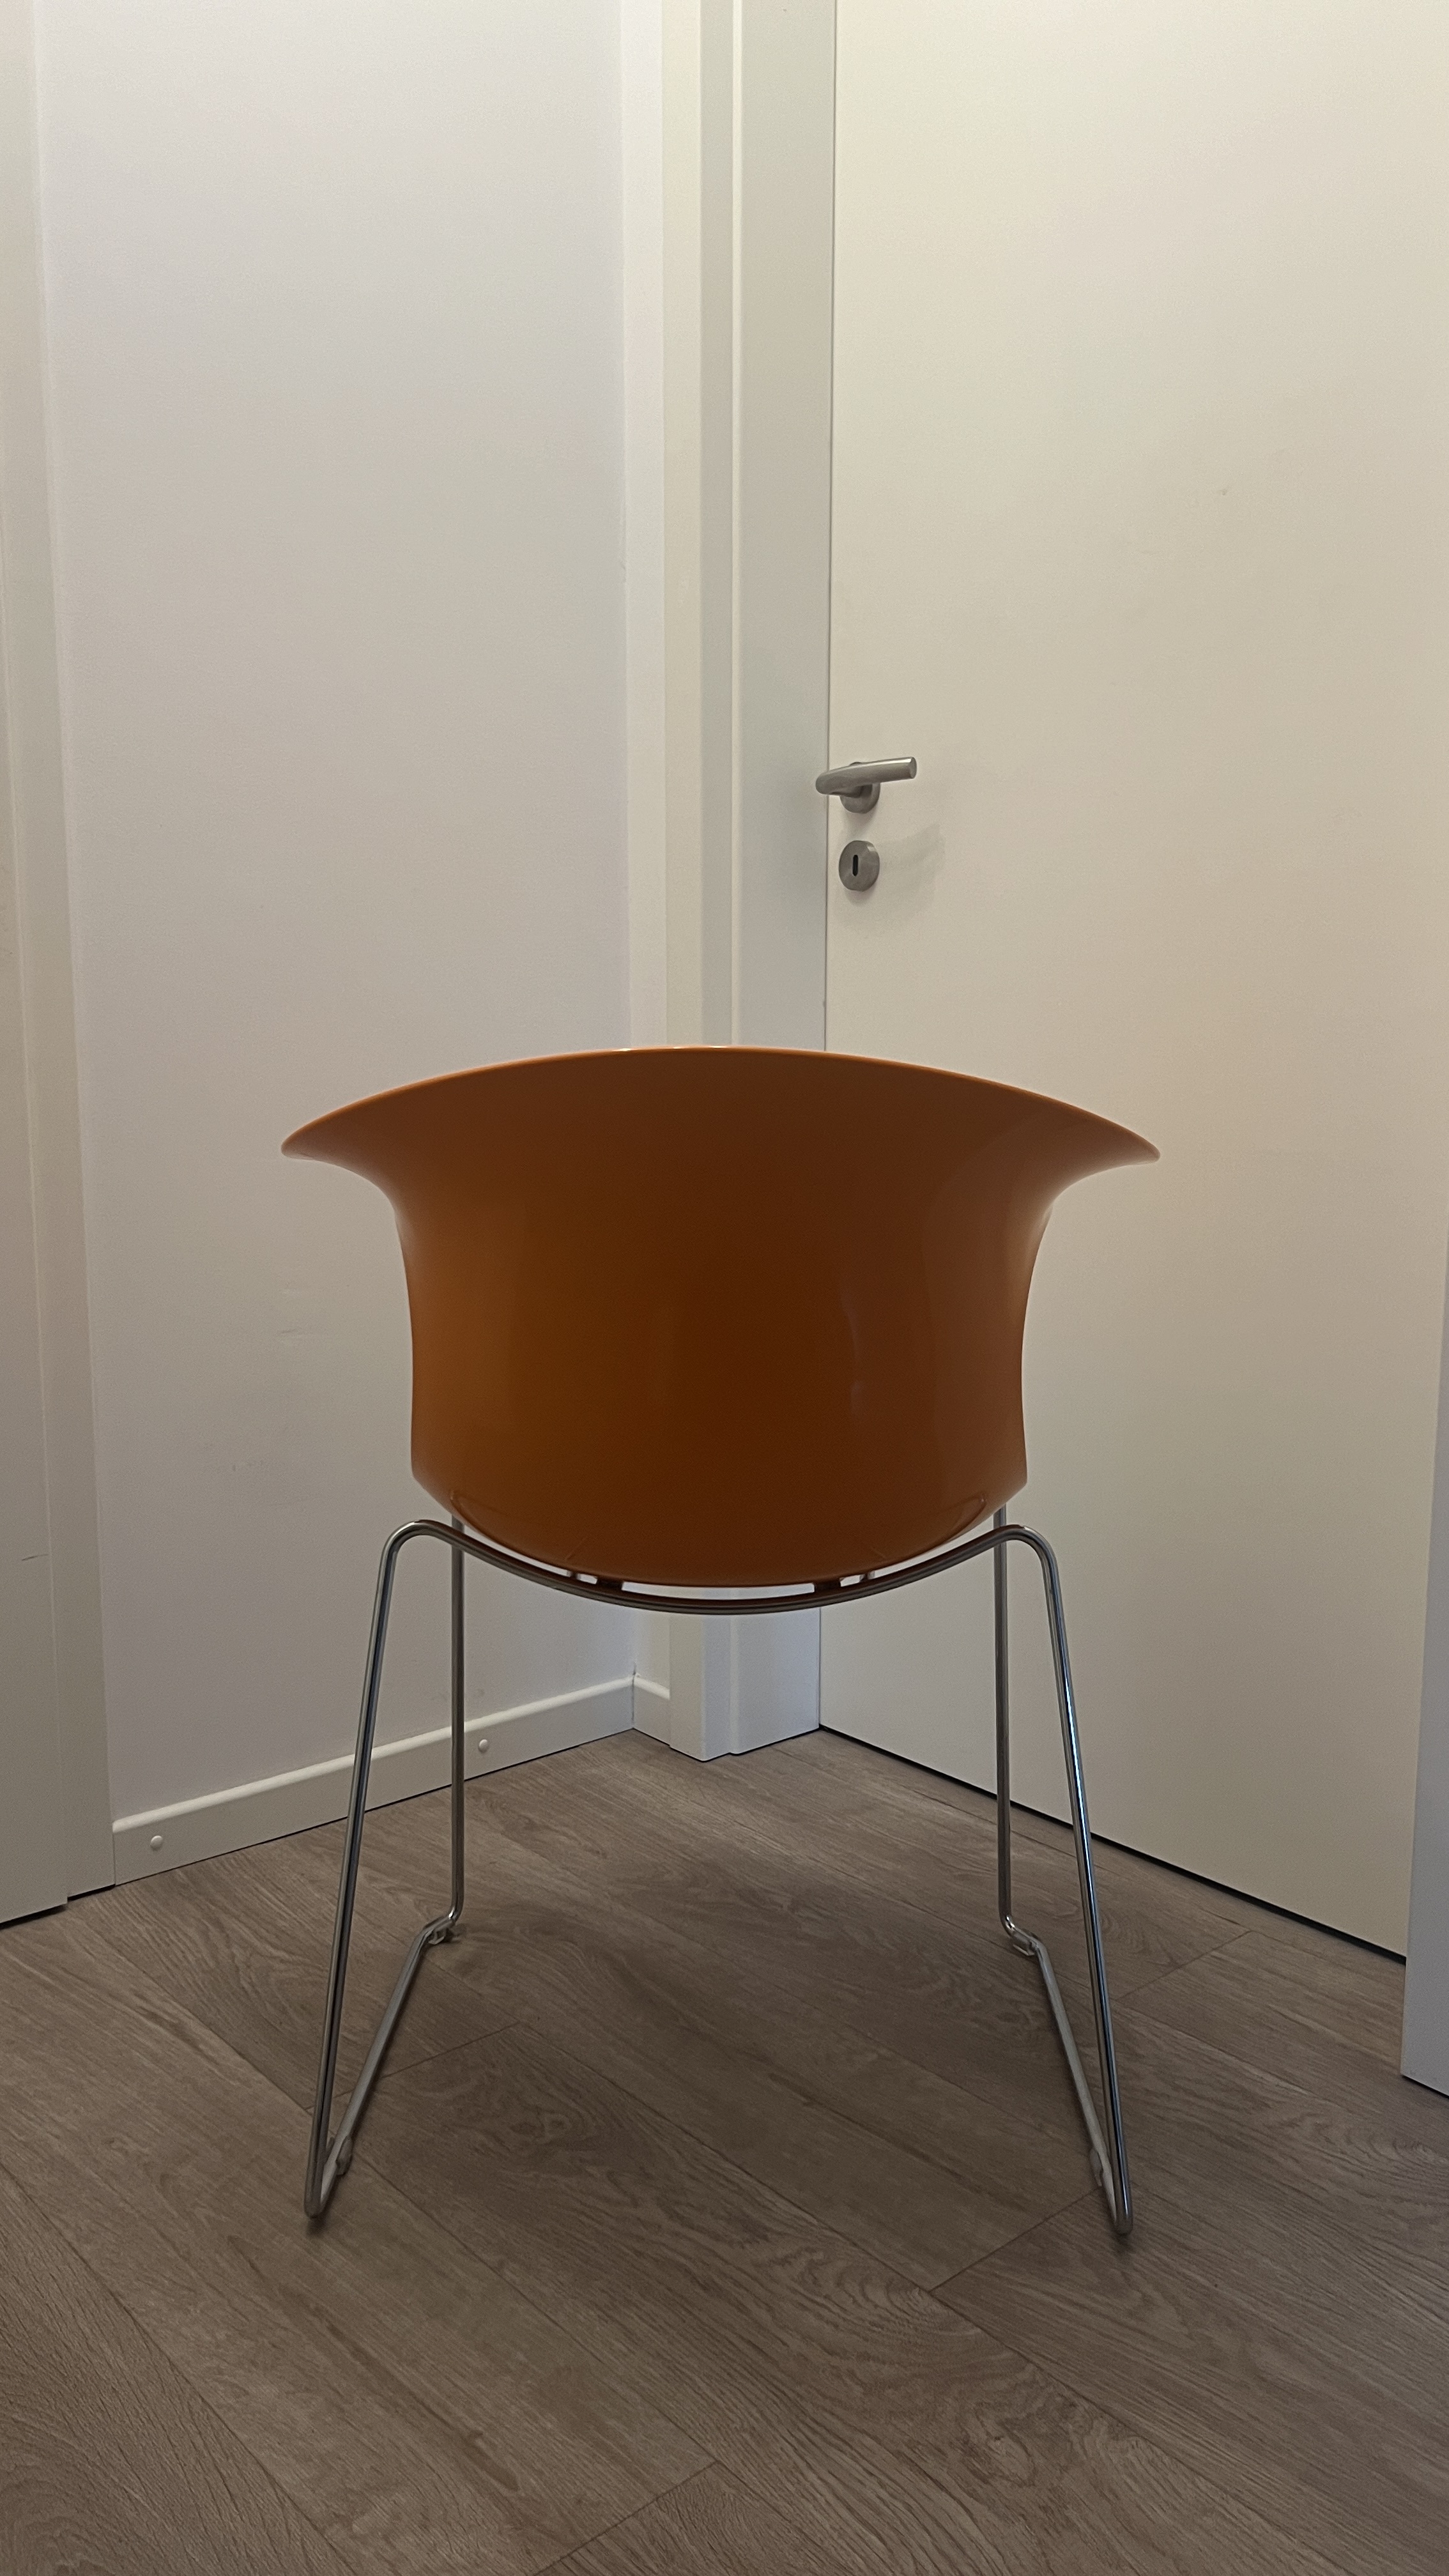 Loop Stuhl Kunststoff Stahl Orange